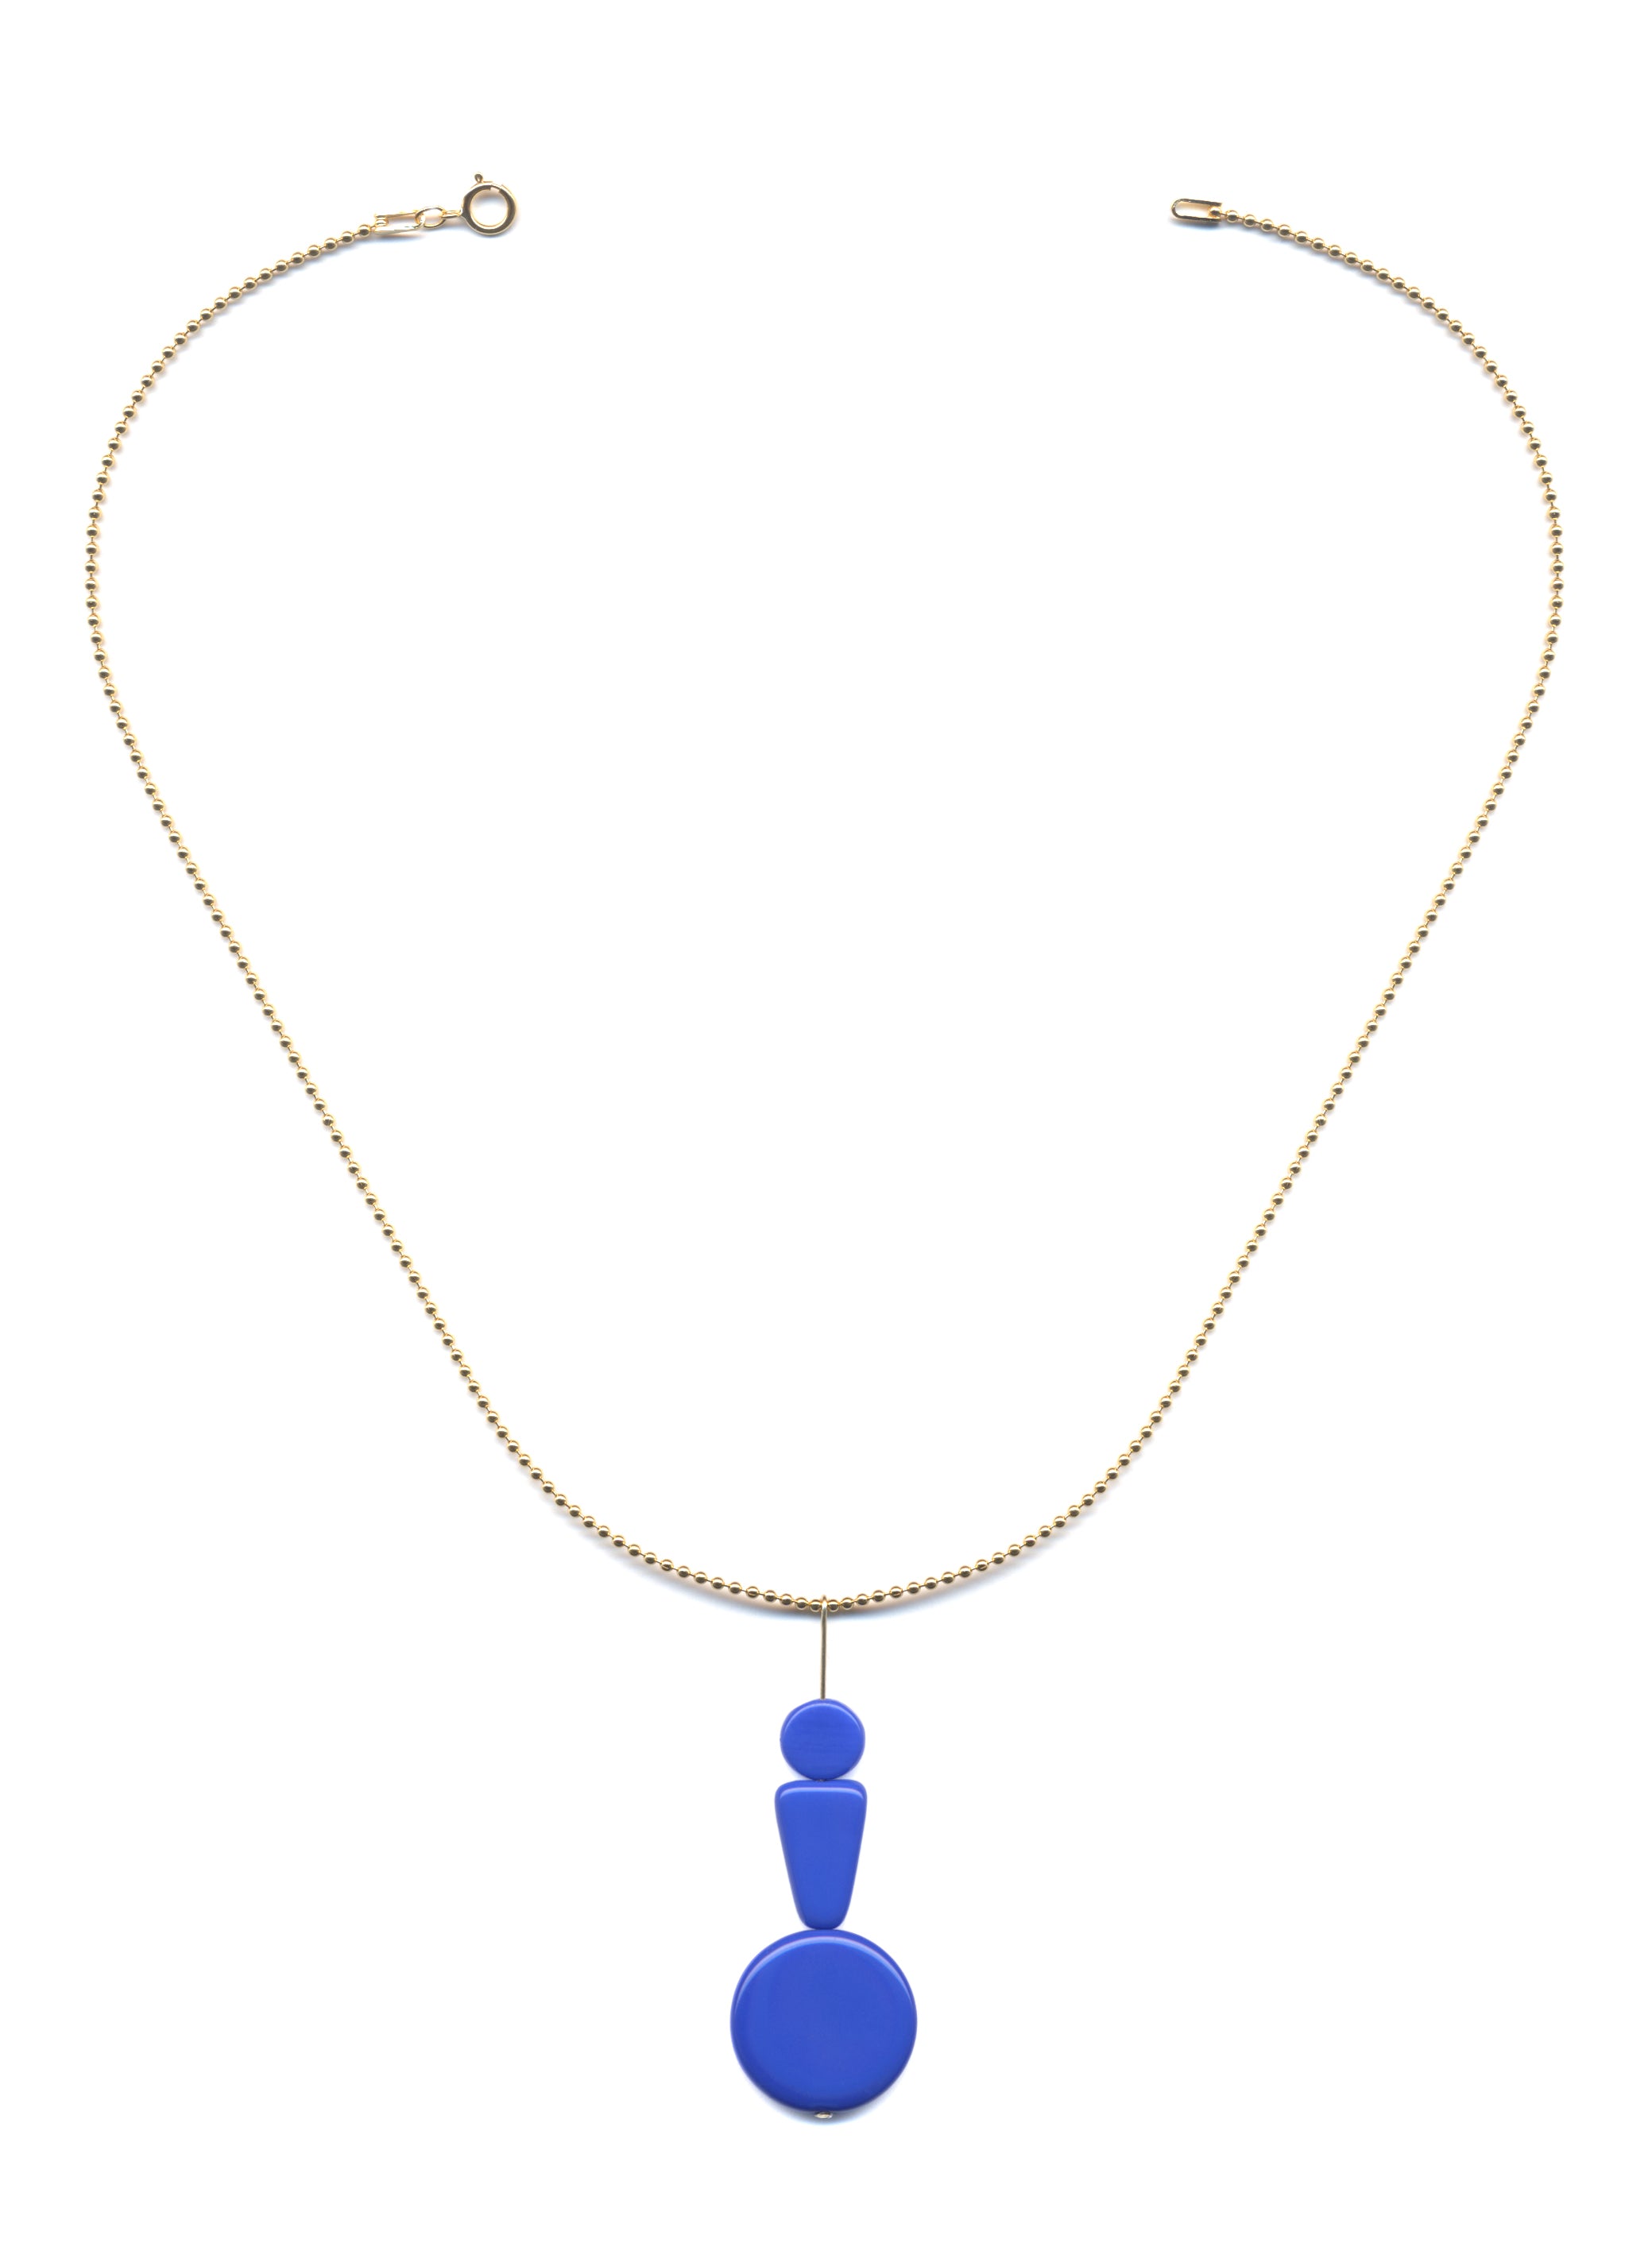 N1969 (Minimal) Necklace